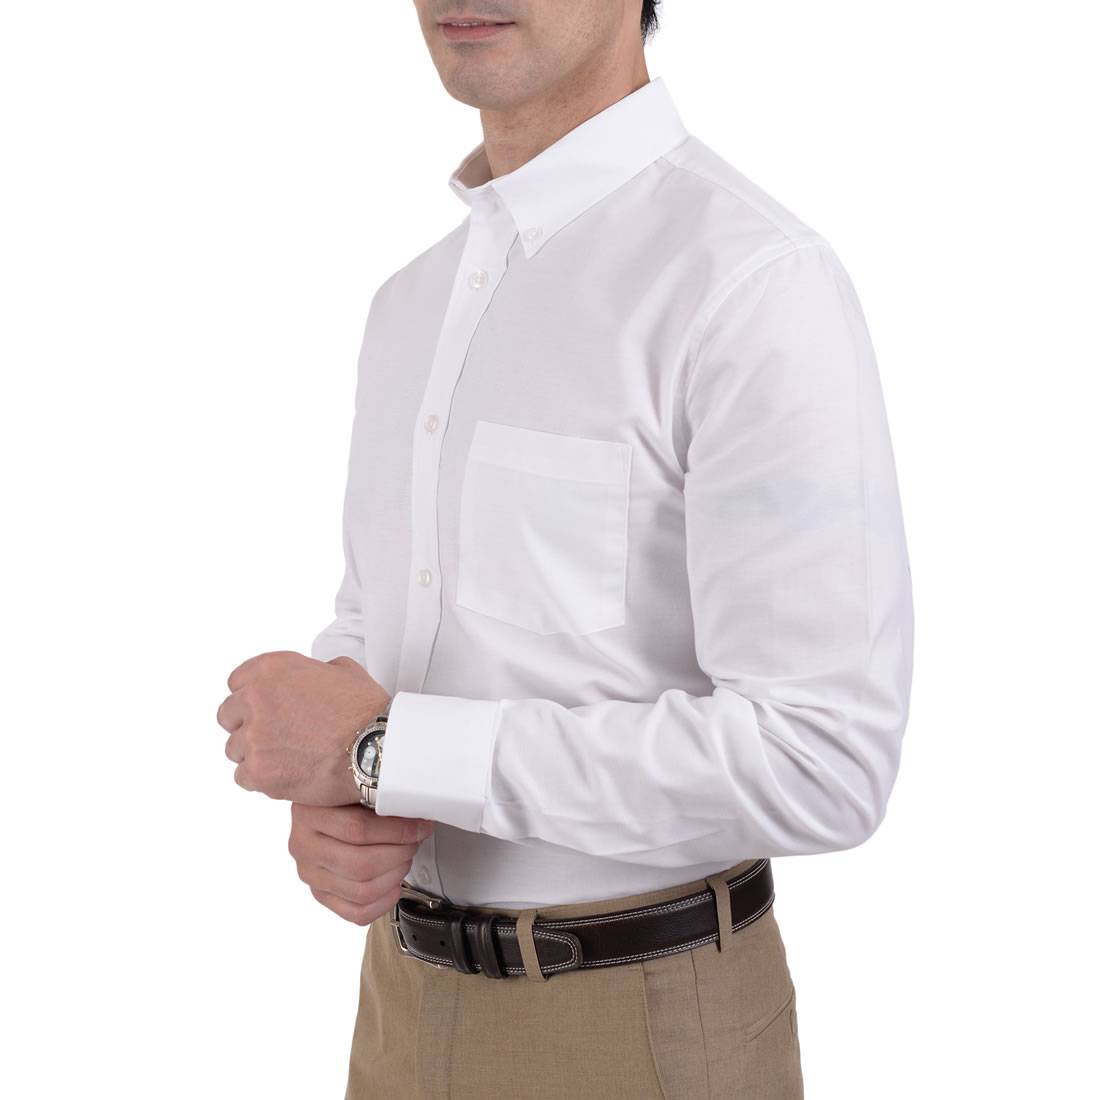 Camisa blanca de manga larga para hombre, camisas de oficina